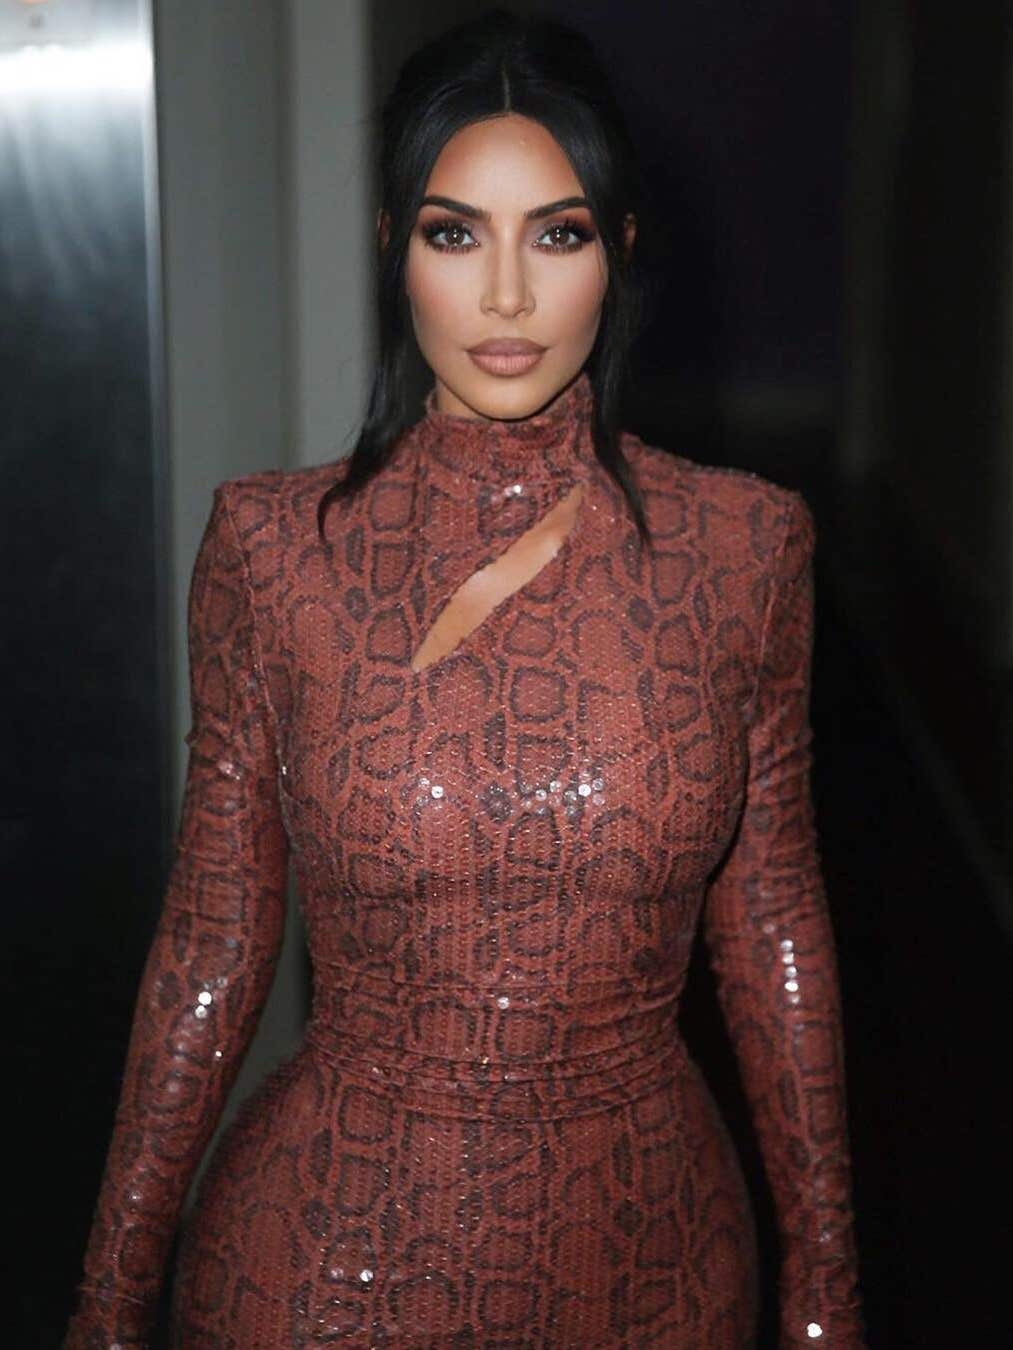 Kim Kardashian Says Her $60M Home Is a “Minimal Monastery”